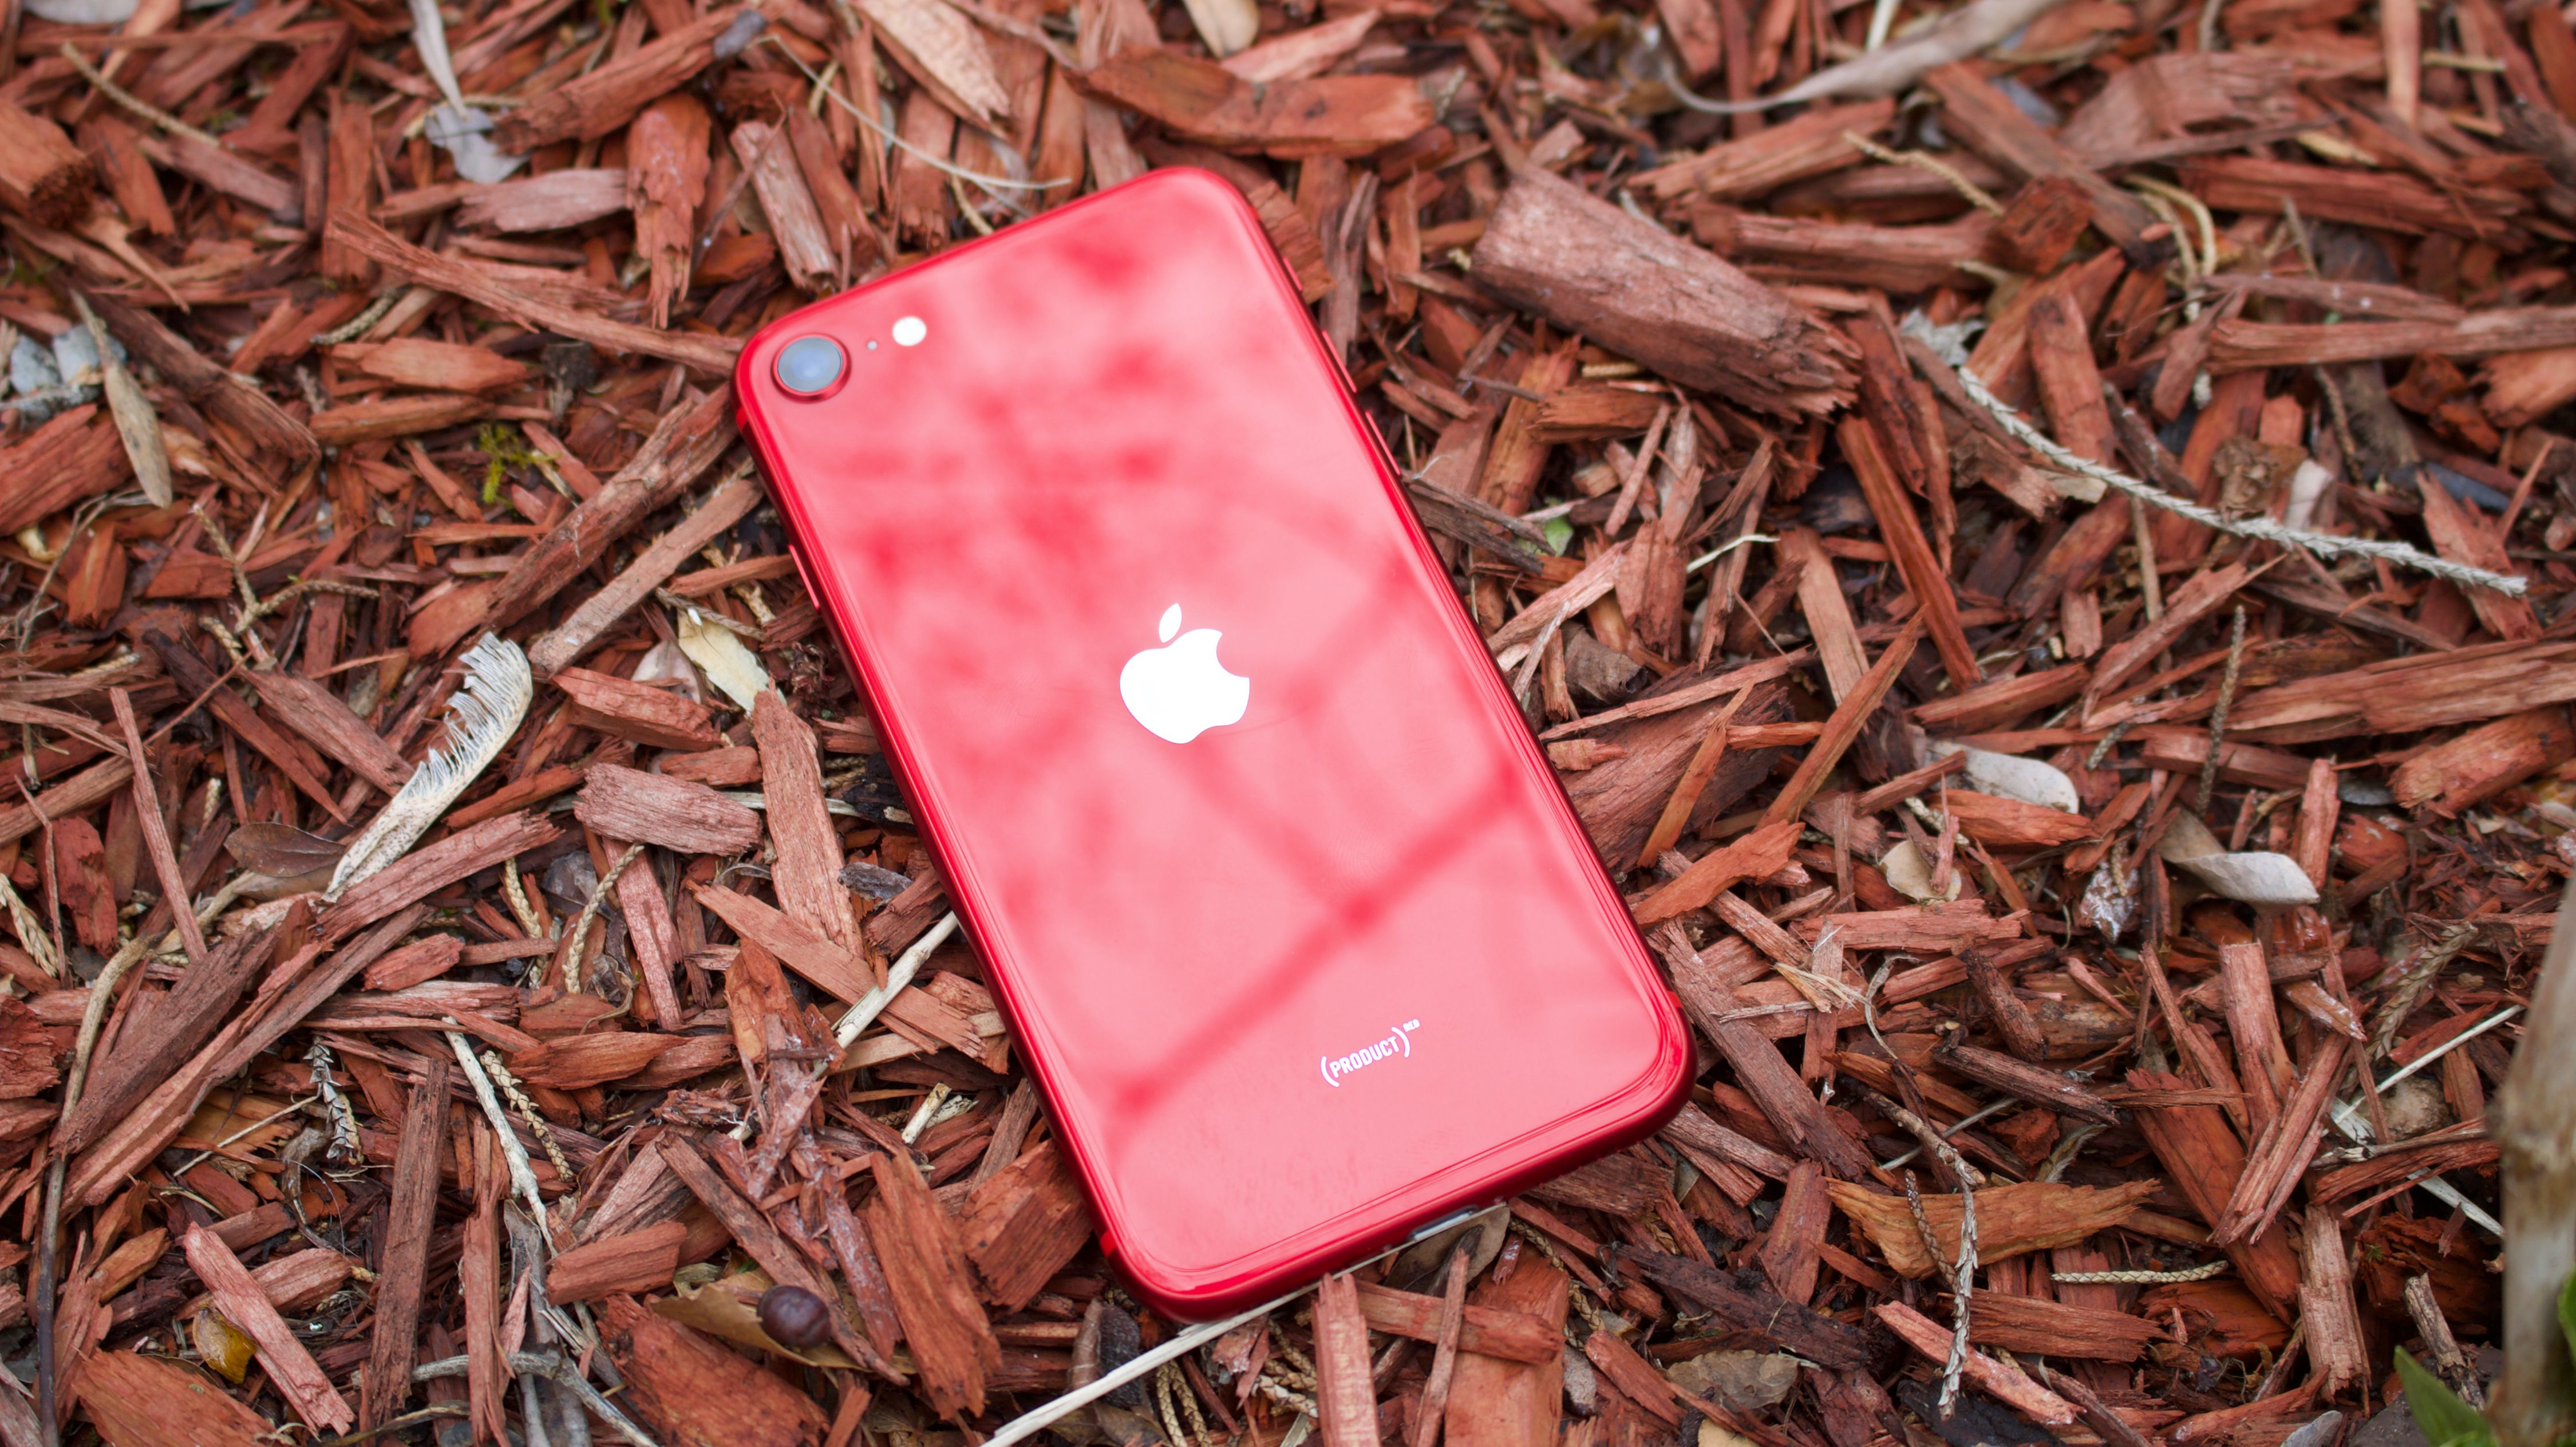 iPhone SE 2020 Review: Apple's iPhone unprecedented value | CNN